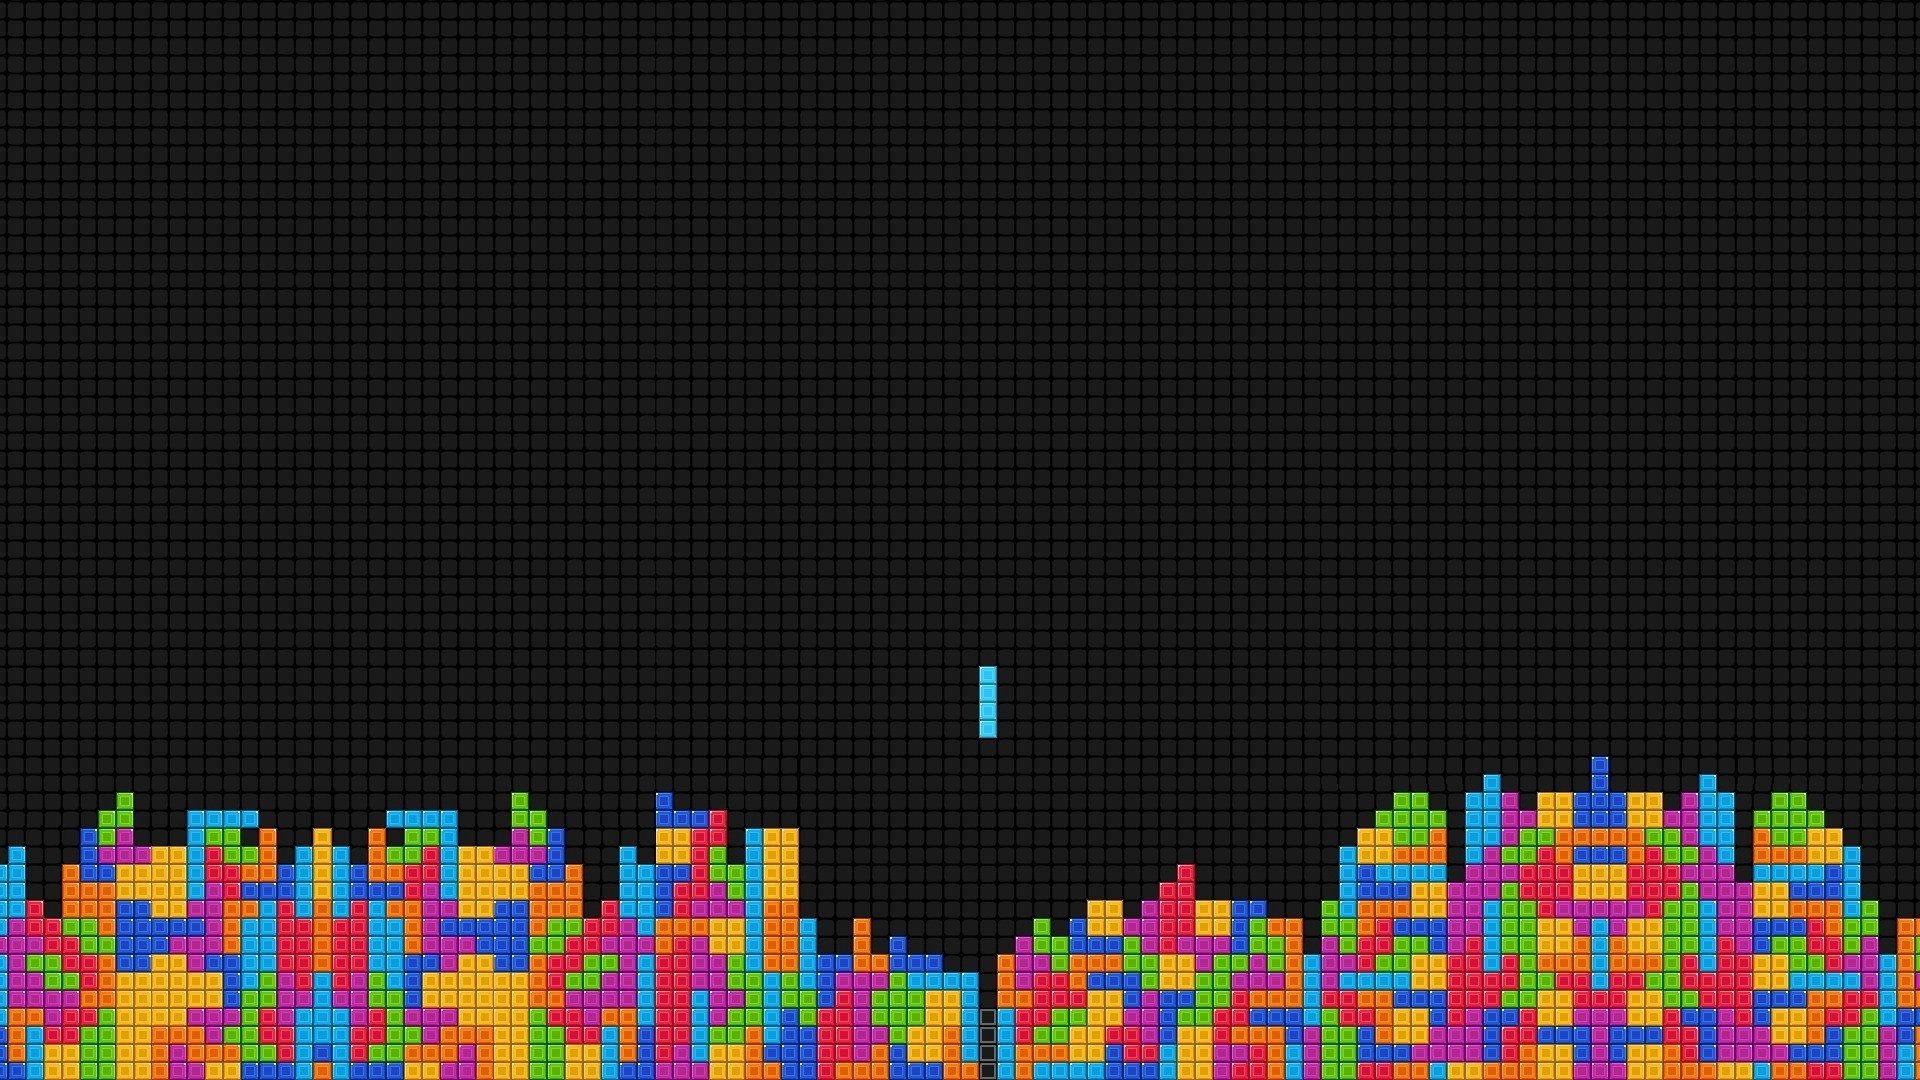 Background Texture Tetris Figures   Free Stock Photos Images HD